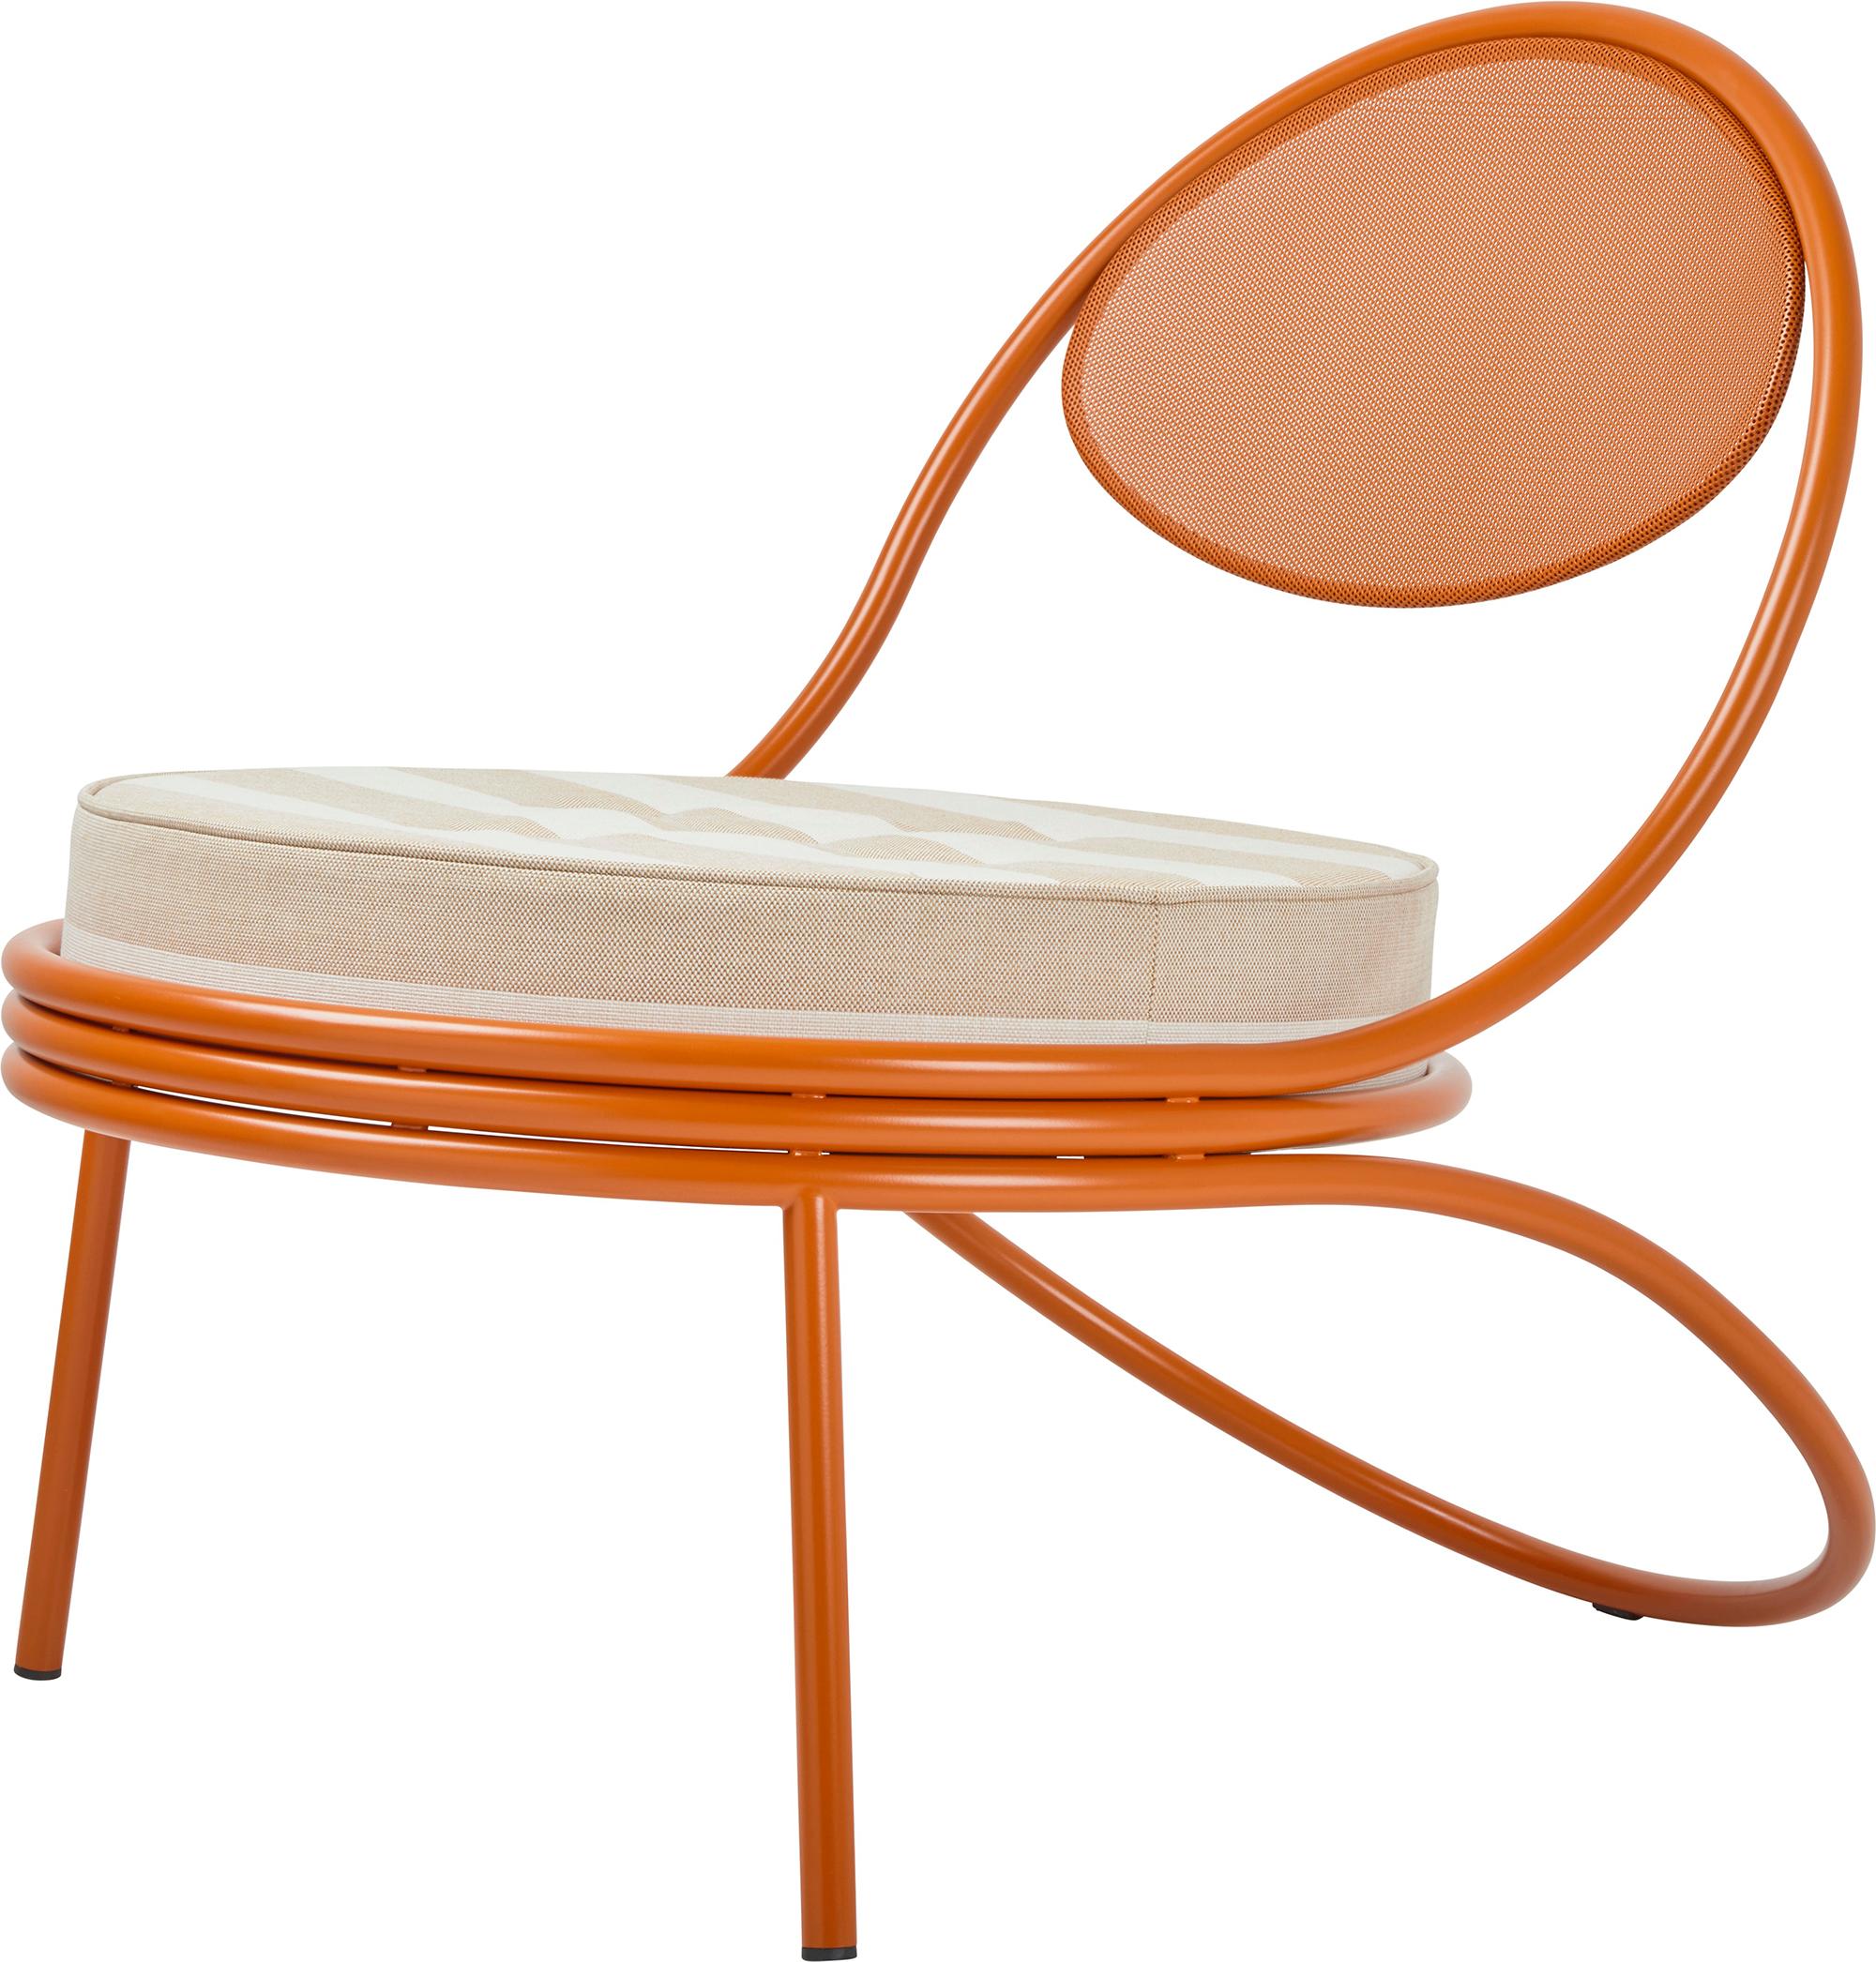 'Copacabana' Indoor Outdoor Lounge Chair by Mathieu Matégot in Lorkey Fabric For Sale 5